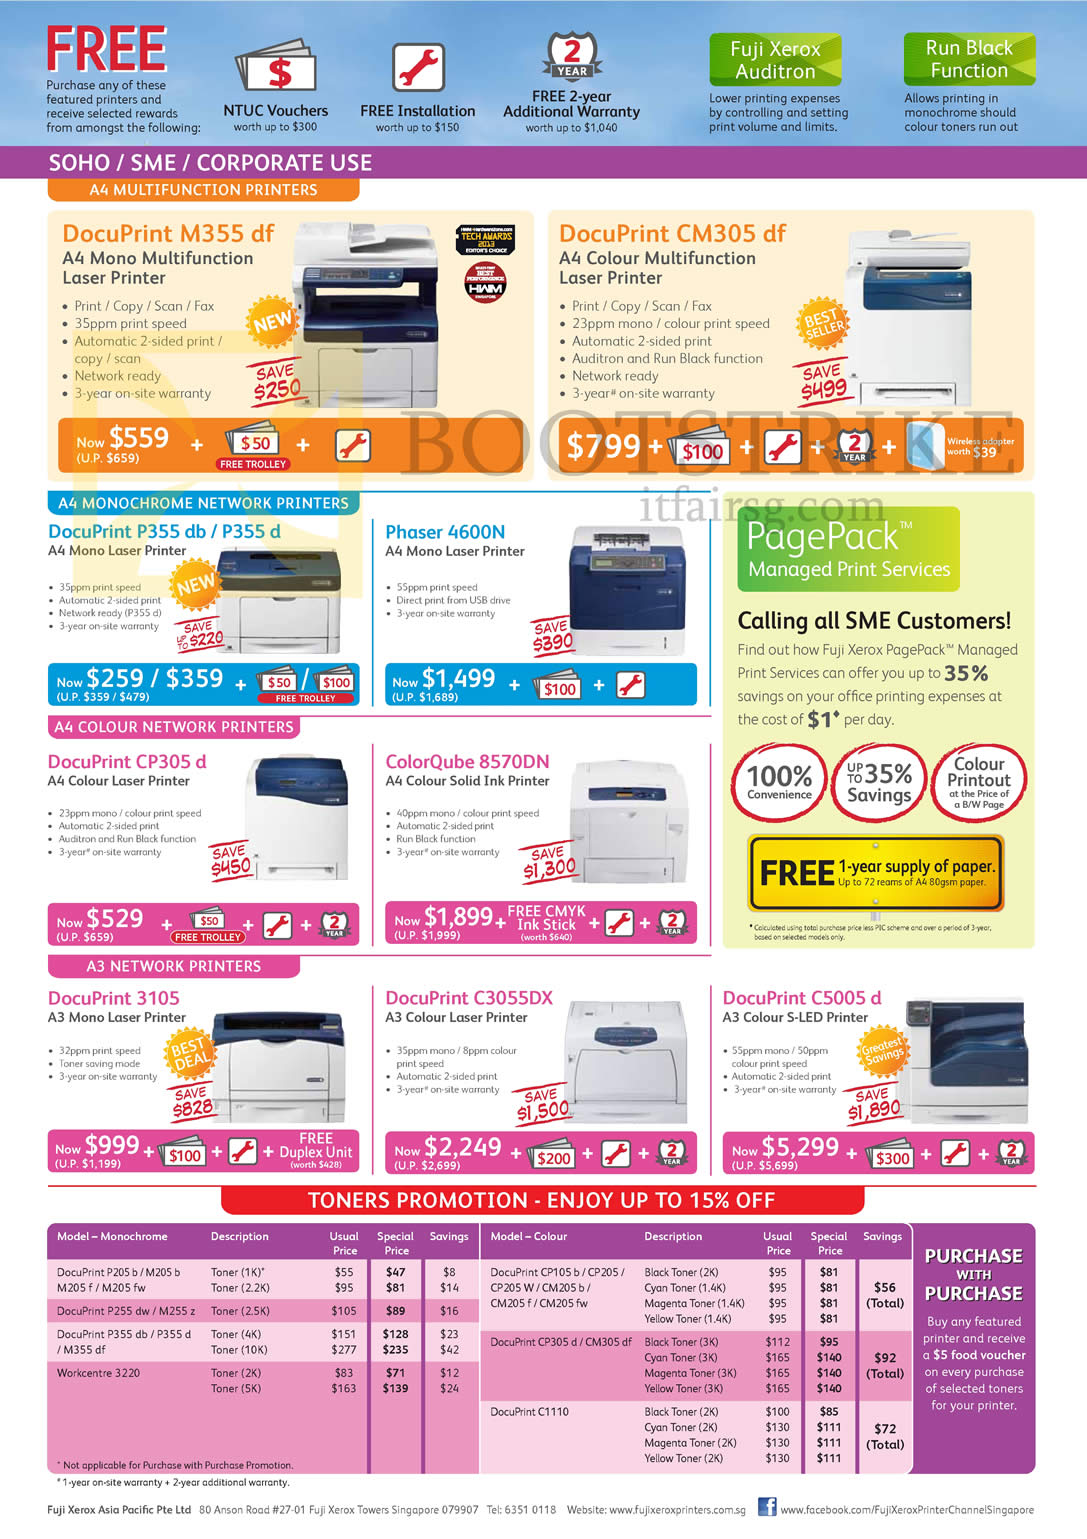 IT SHOW 2013 price list image brochure of Fujifilm Fuji Xerox Printers DocuPrint M355 Df, CM305 Df, P355 Db D, CP305 D, 3105, C3055DX, C5005 D, Phaser 4600N, ColorQube 8570DN, Toners